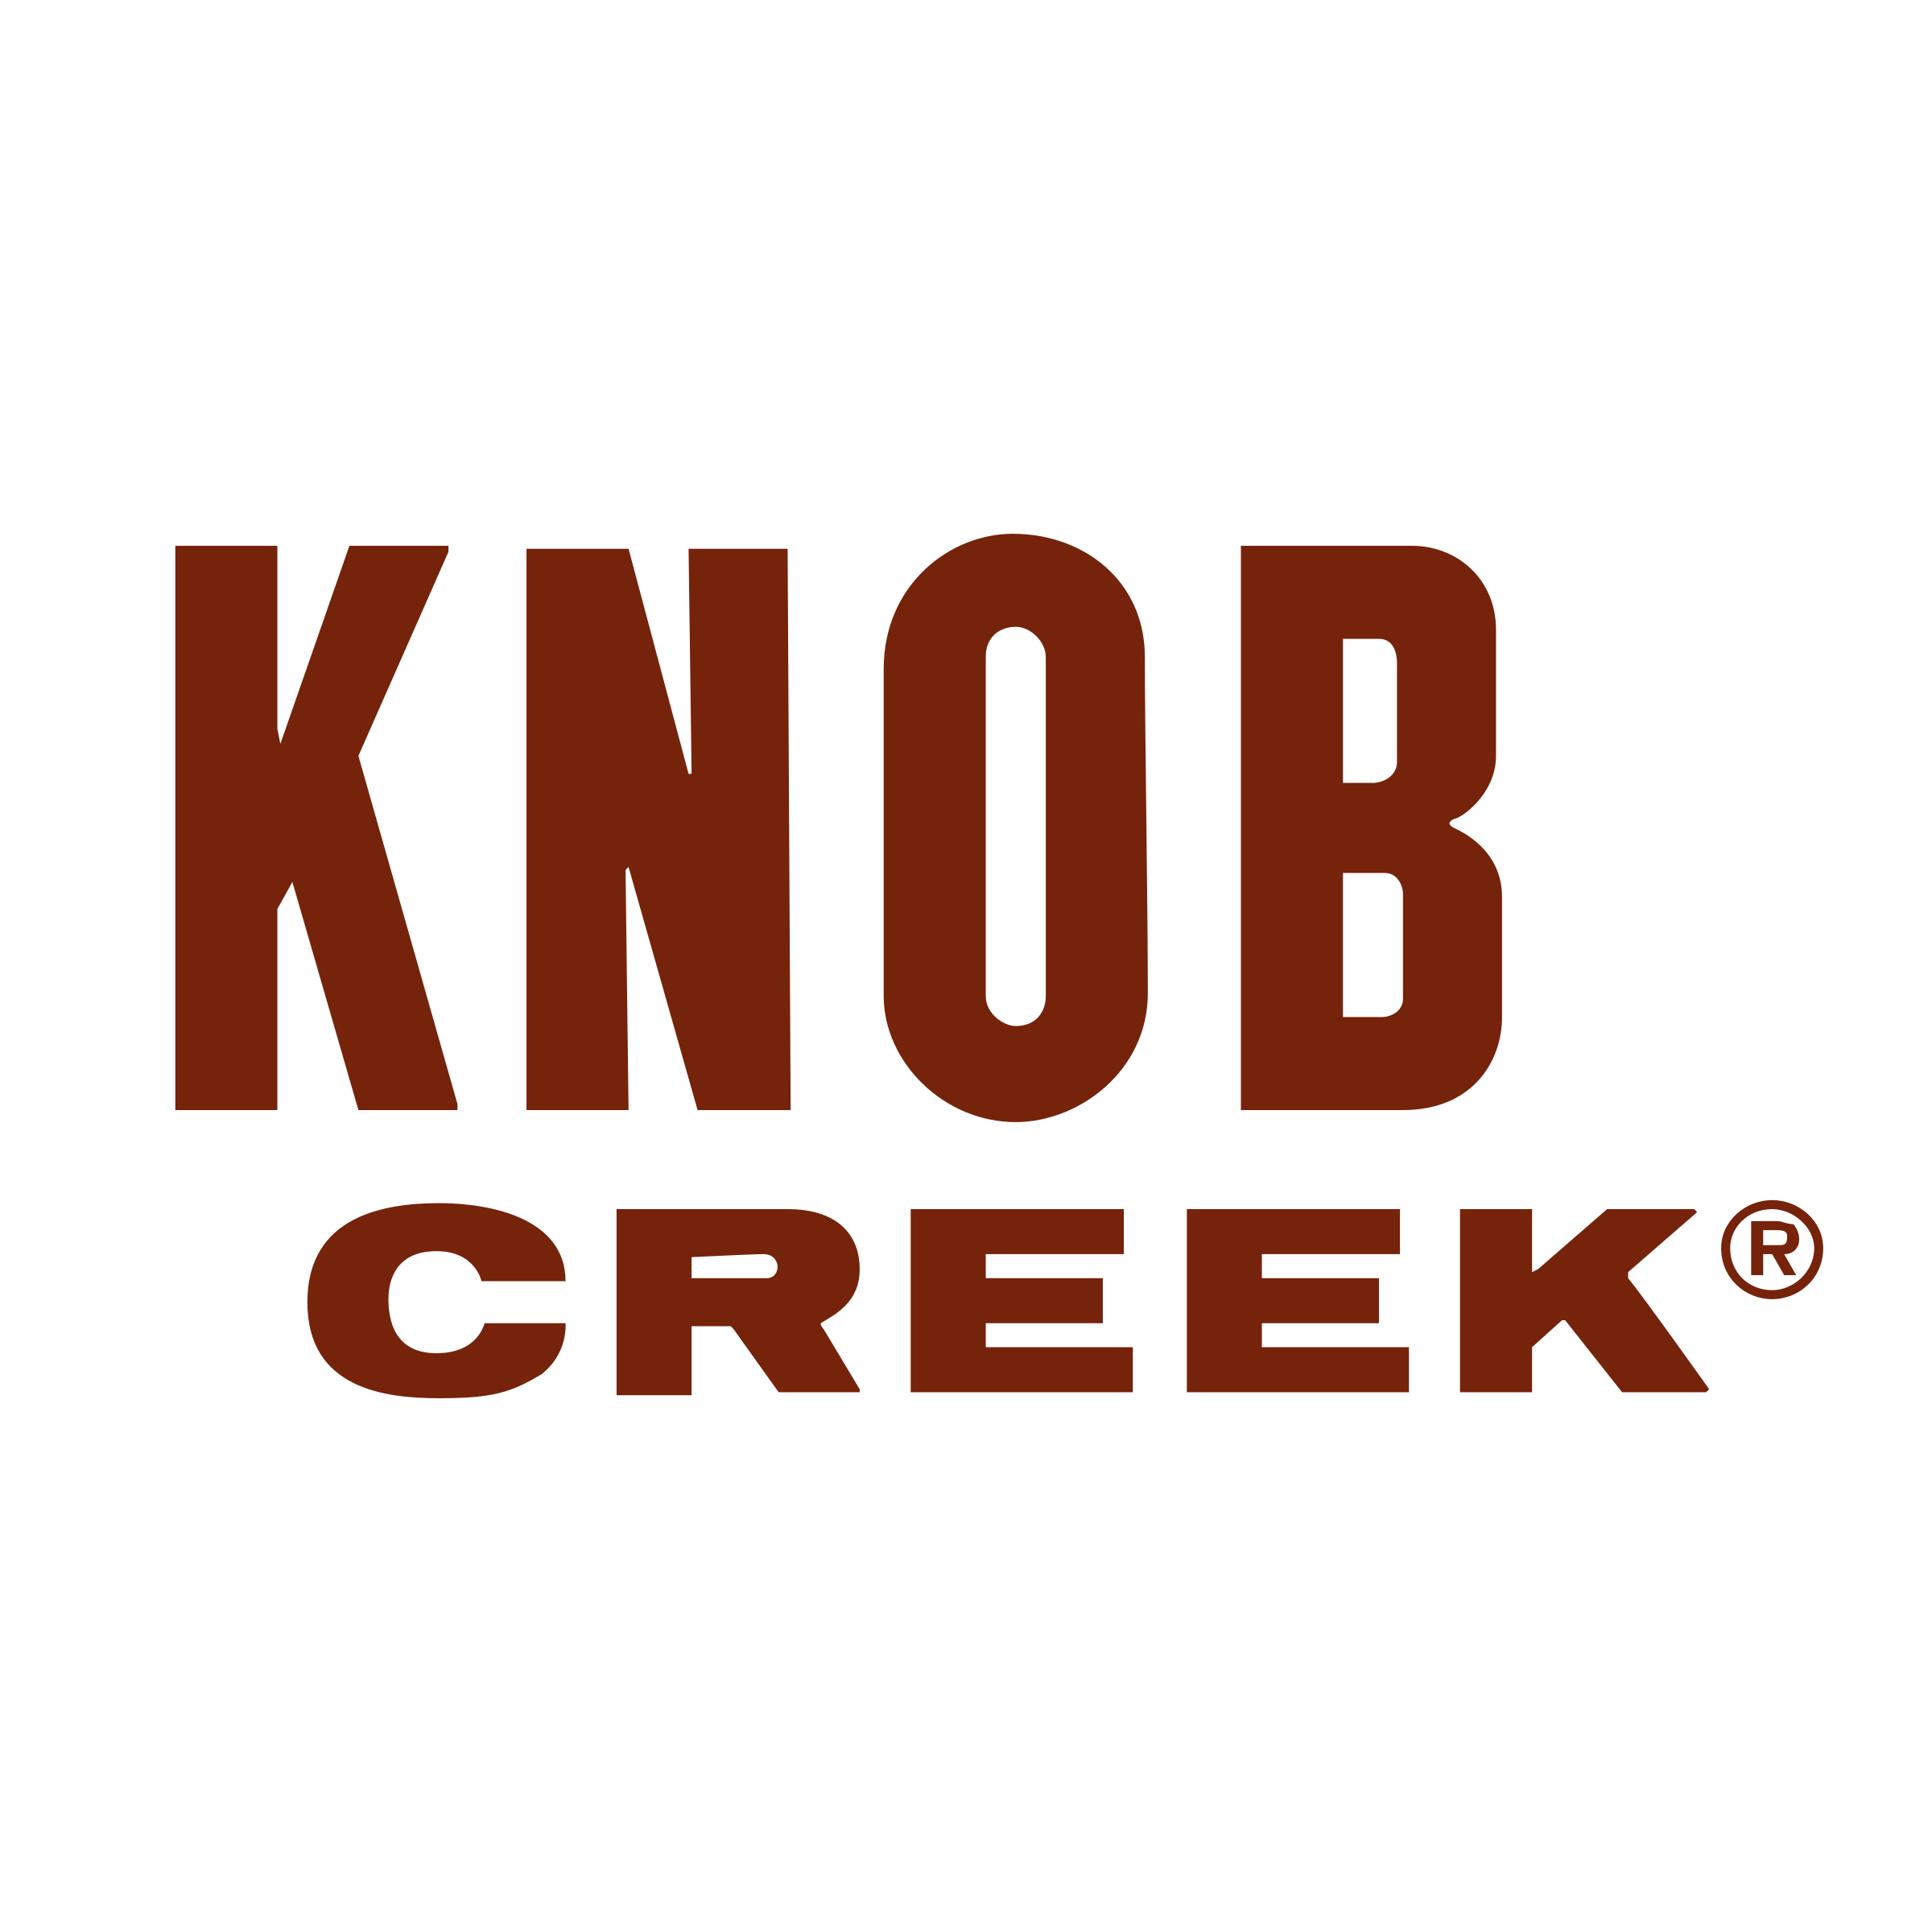 Creek Logo - Knob Creek Logo PNG Transparent & SVG Vector - Freebie Supply